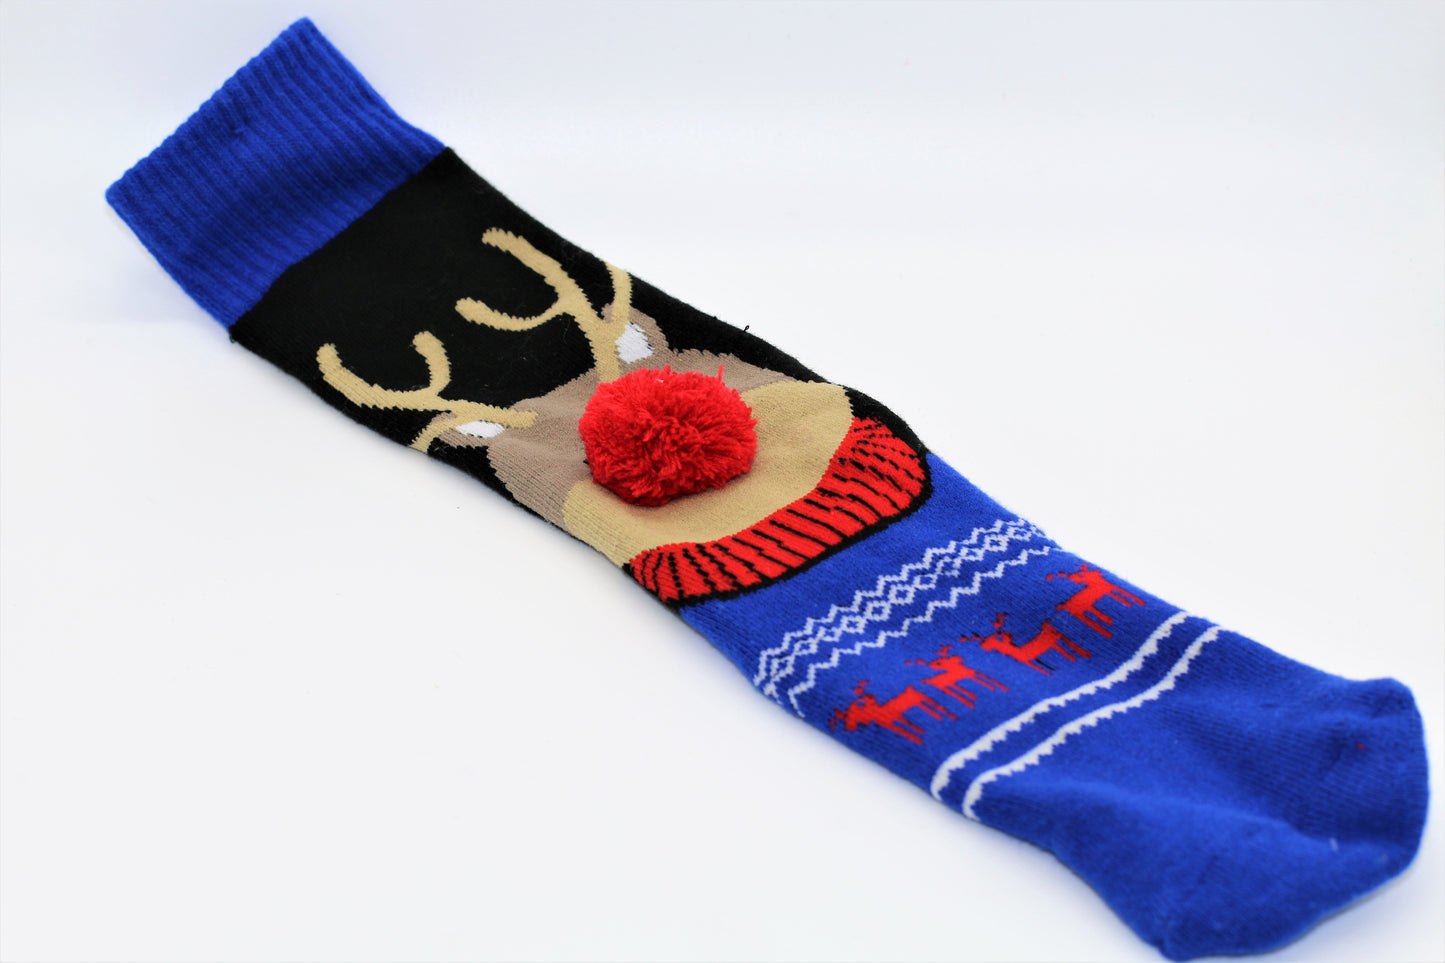 red nose Reindeer Christmas Socks